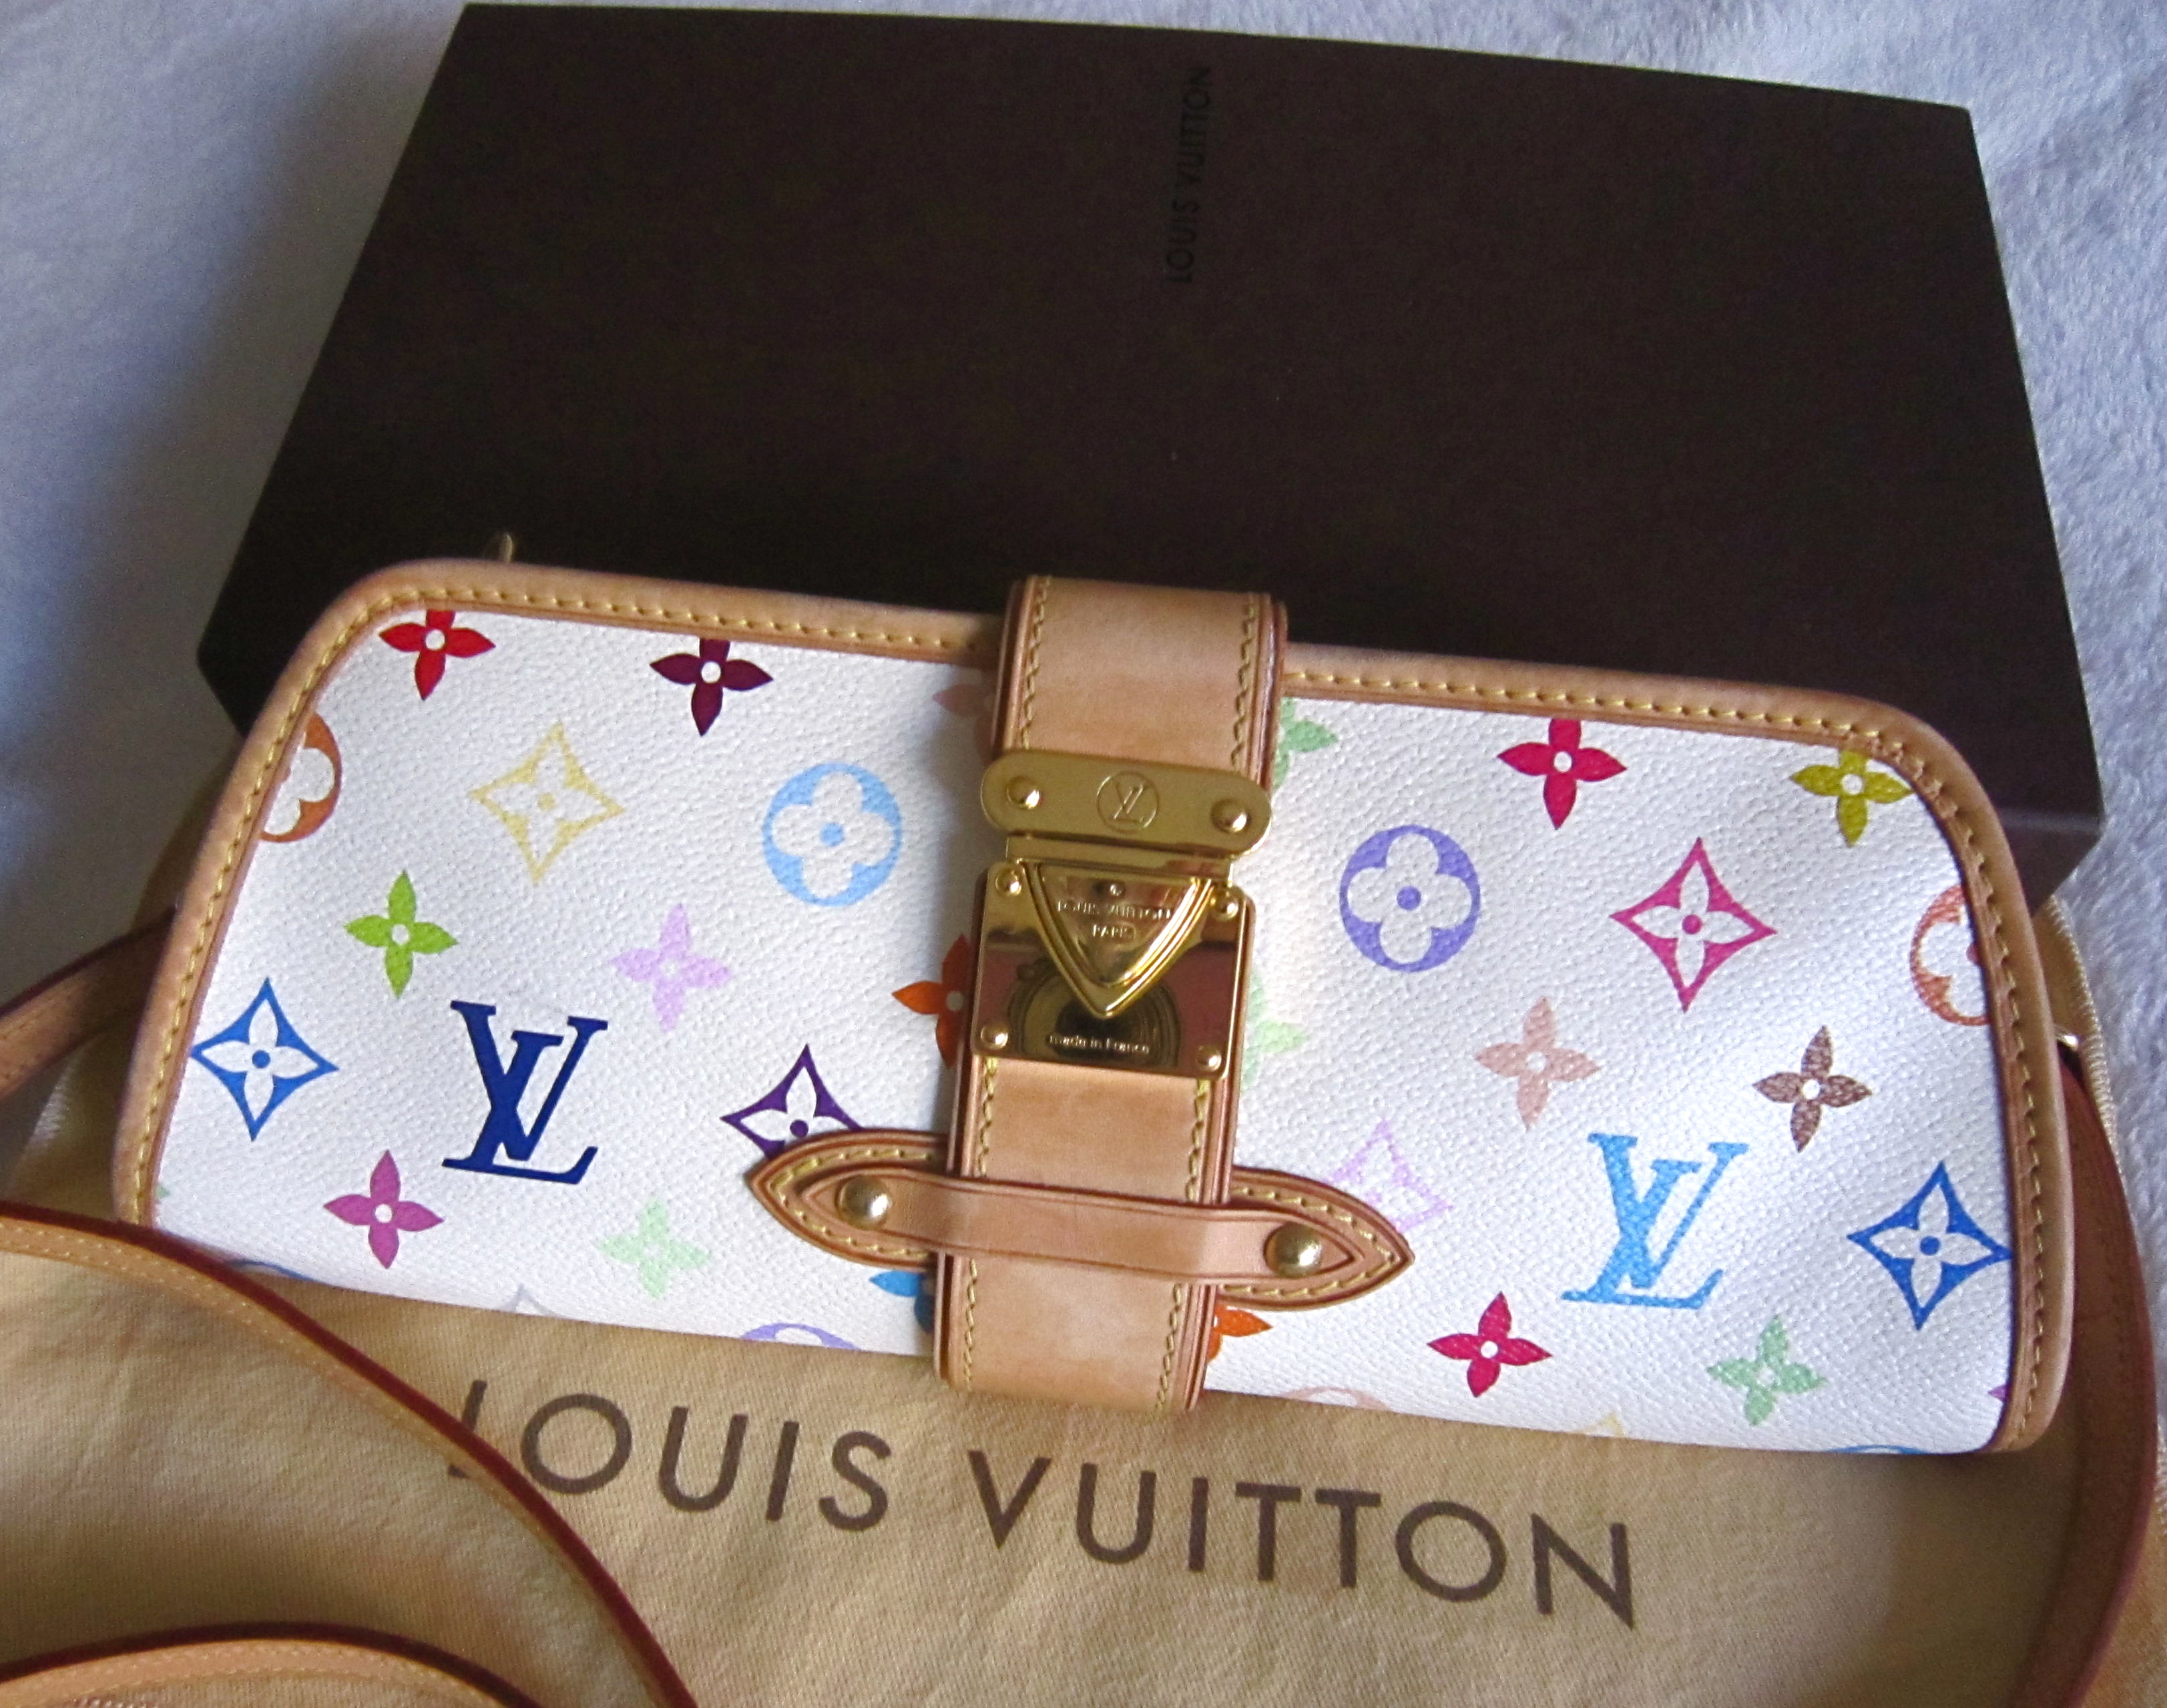 AUTHENTIC Louis Vuitton Shirley Clutch White Multicolore PREOWNED (WBA –  Jj's Closet, LLC